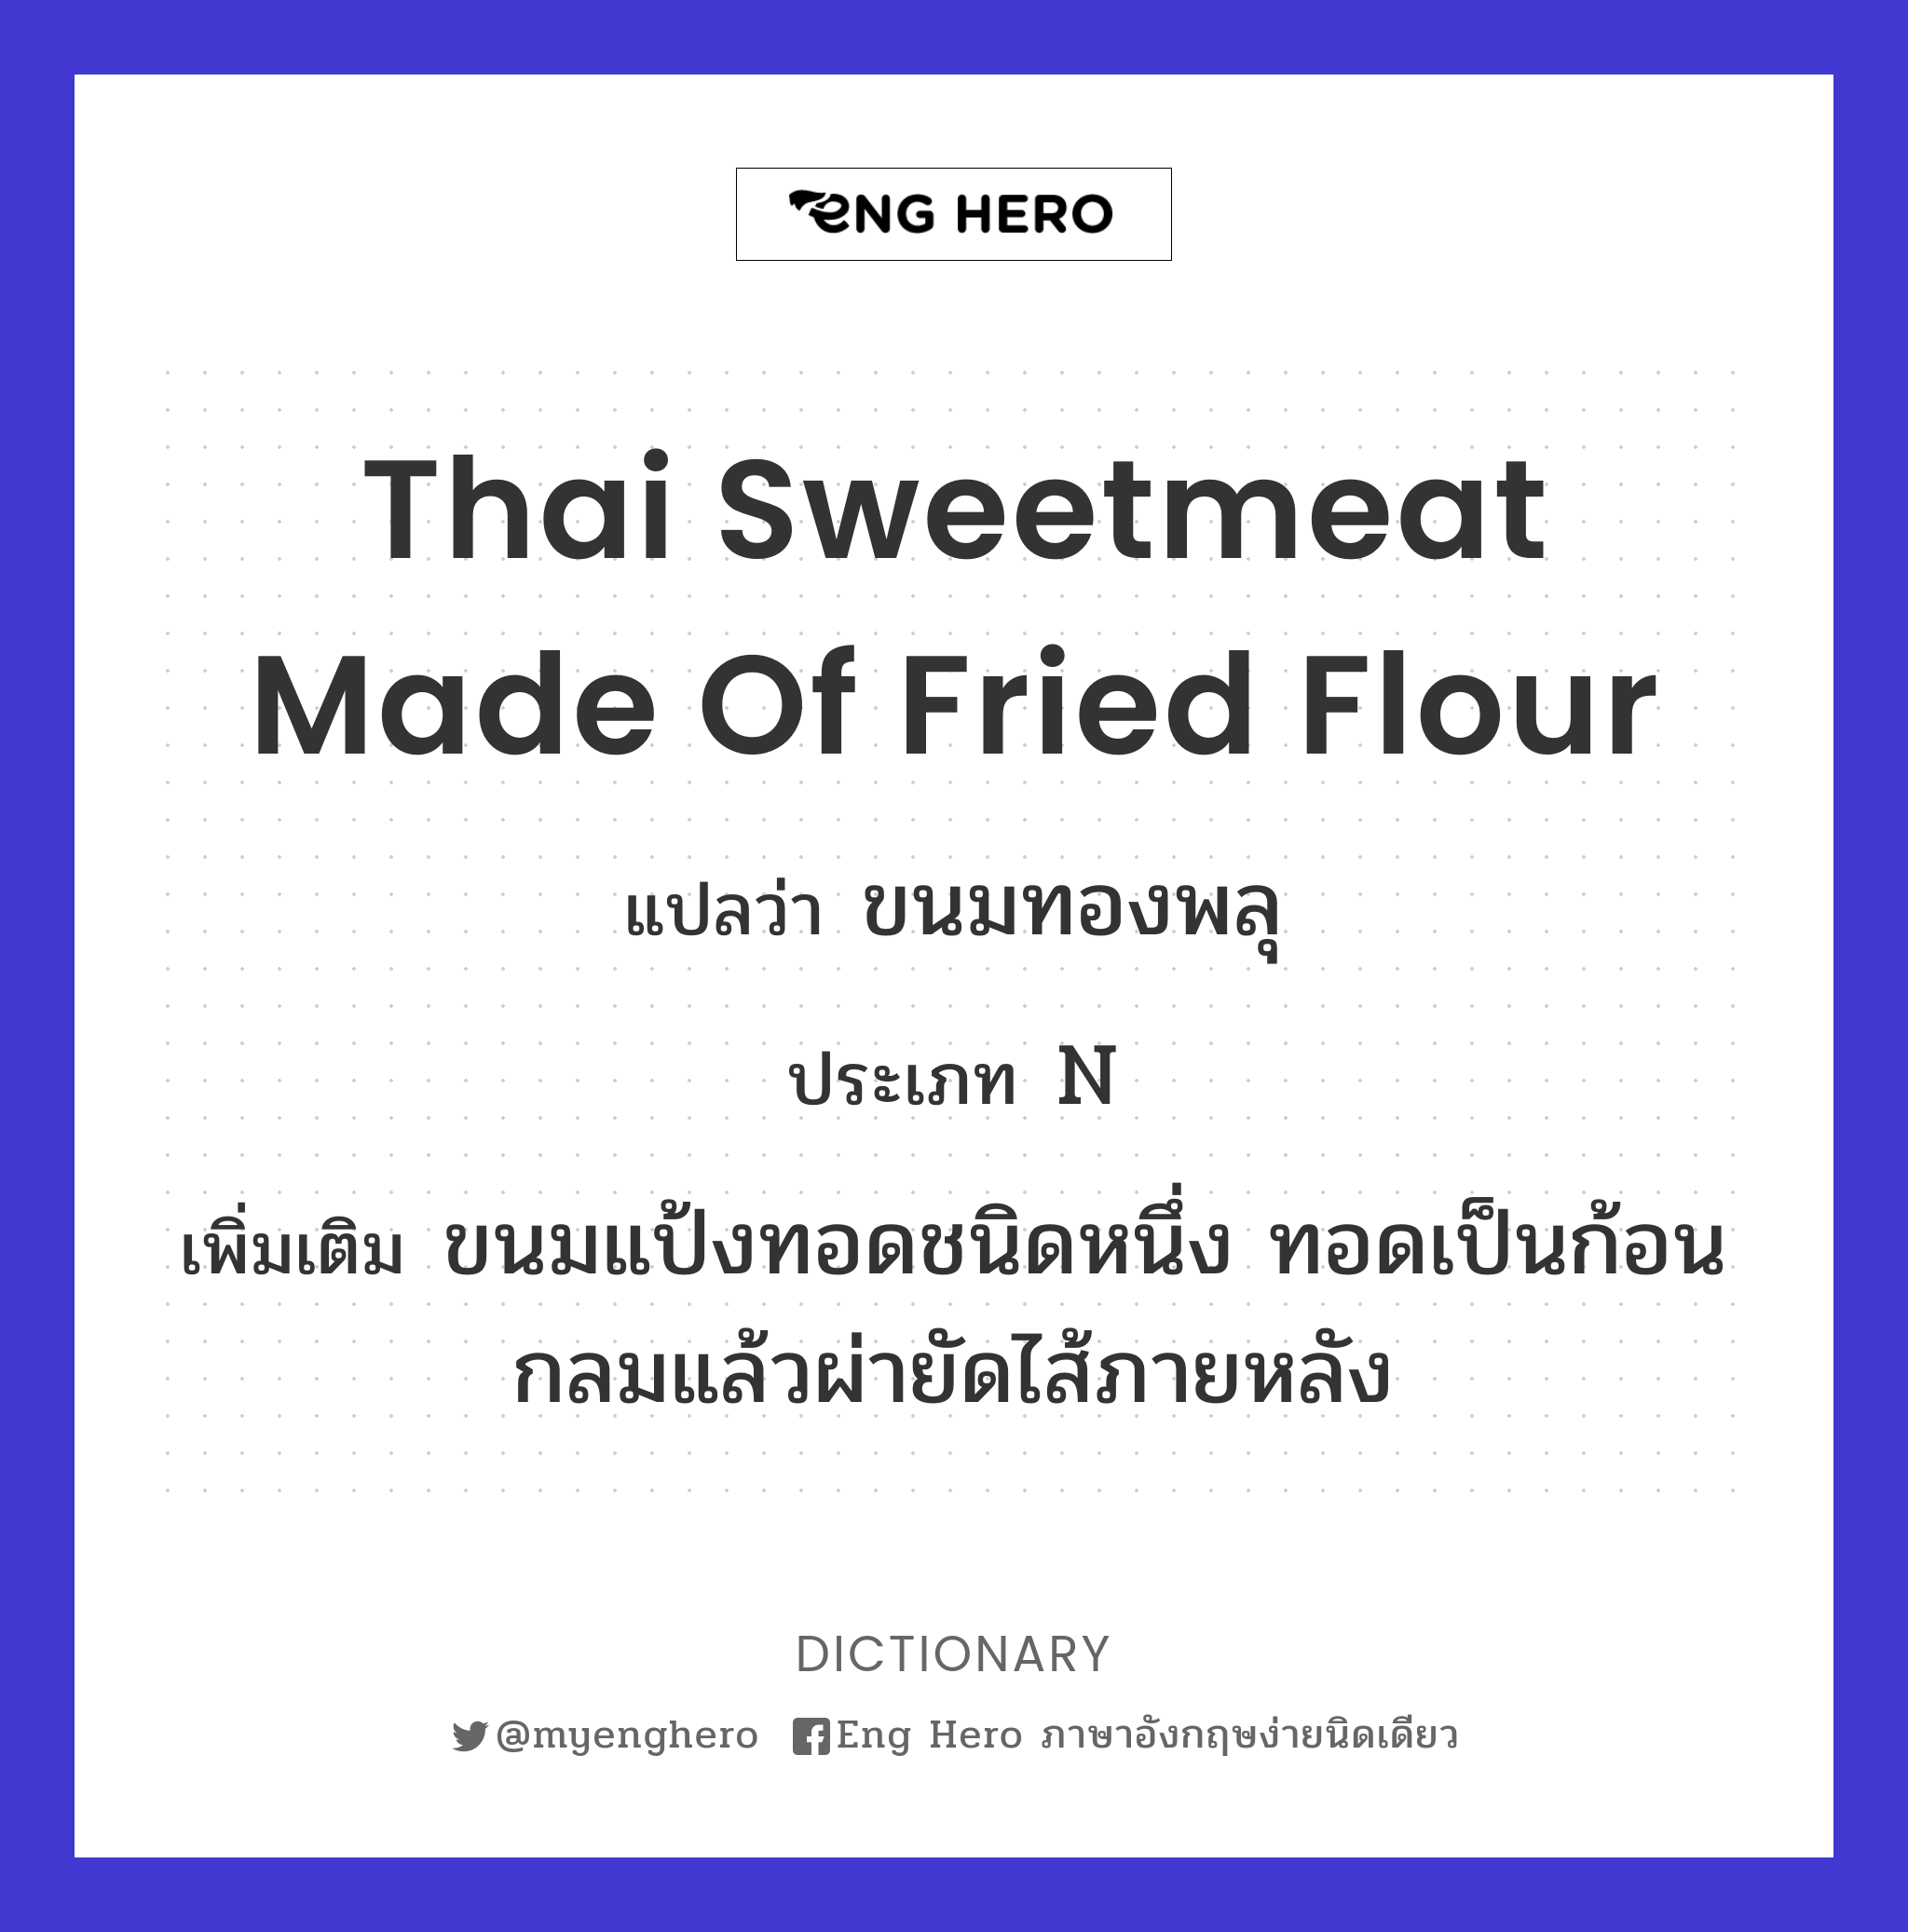 Thai sweetmeat made of fried flour